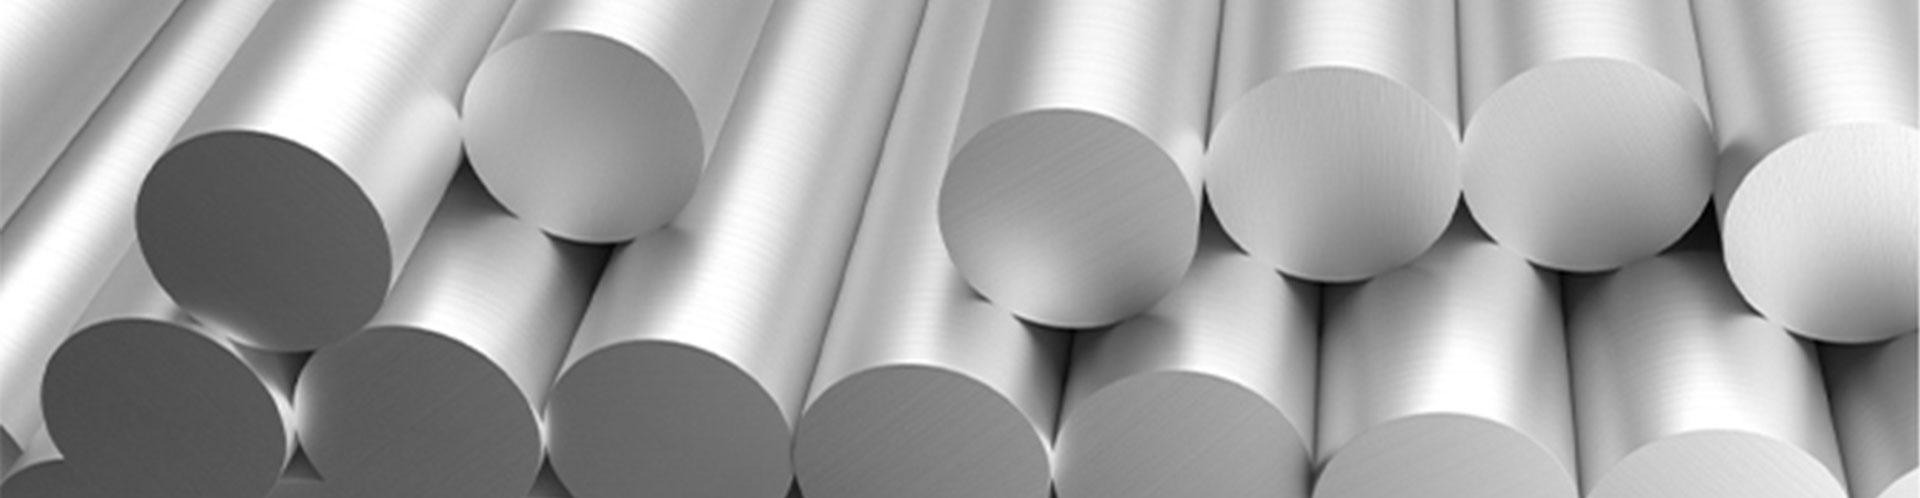 Titanium CNC Machining: Creating High-Performance Parts for Demanding Applications